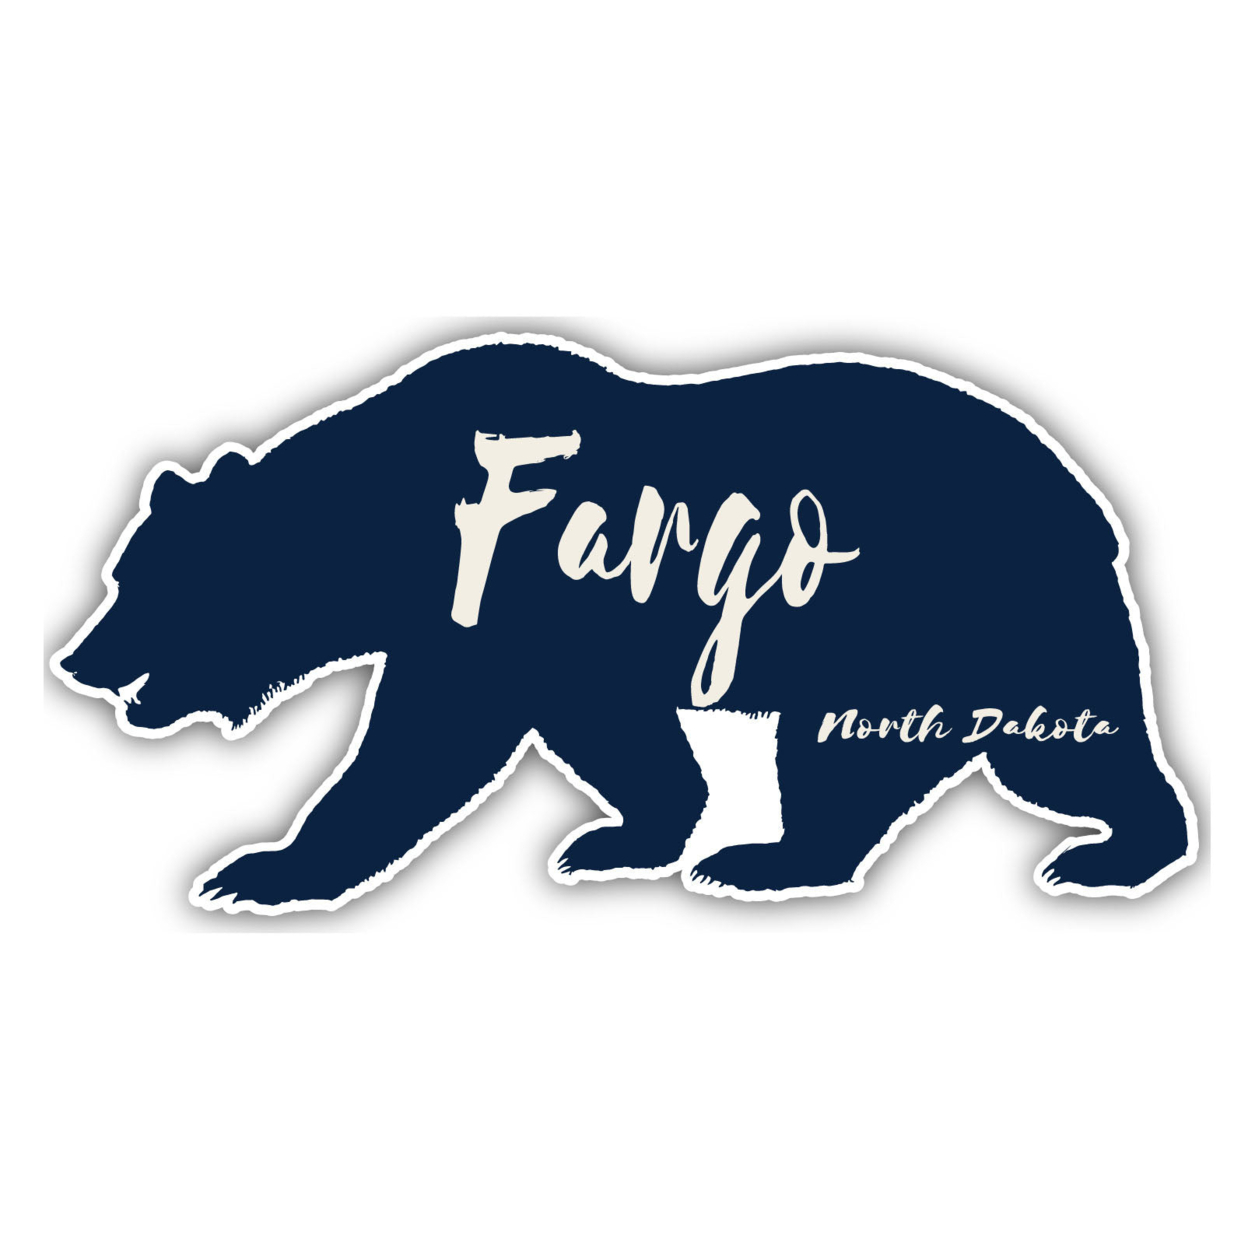 Fargo North Dakota Souvenir Decorative Stickers (Choose Theme And Size) - Single Unit, 10-Inch, Adventures Awaits